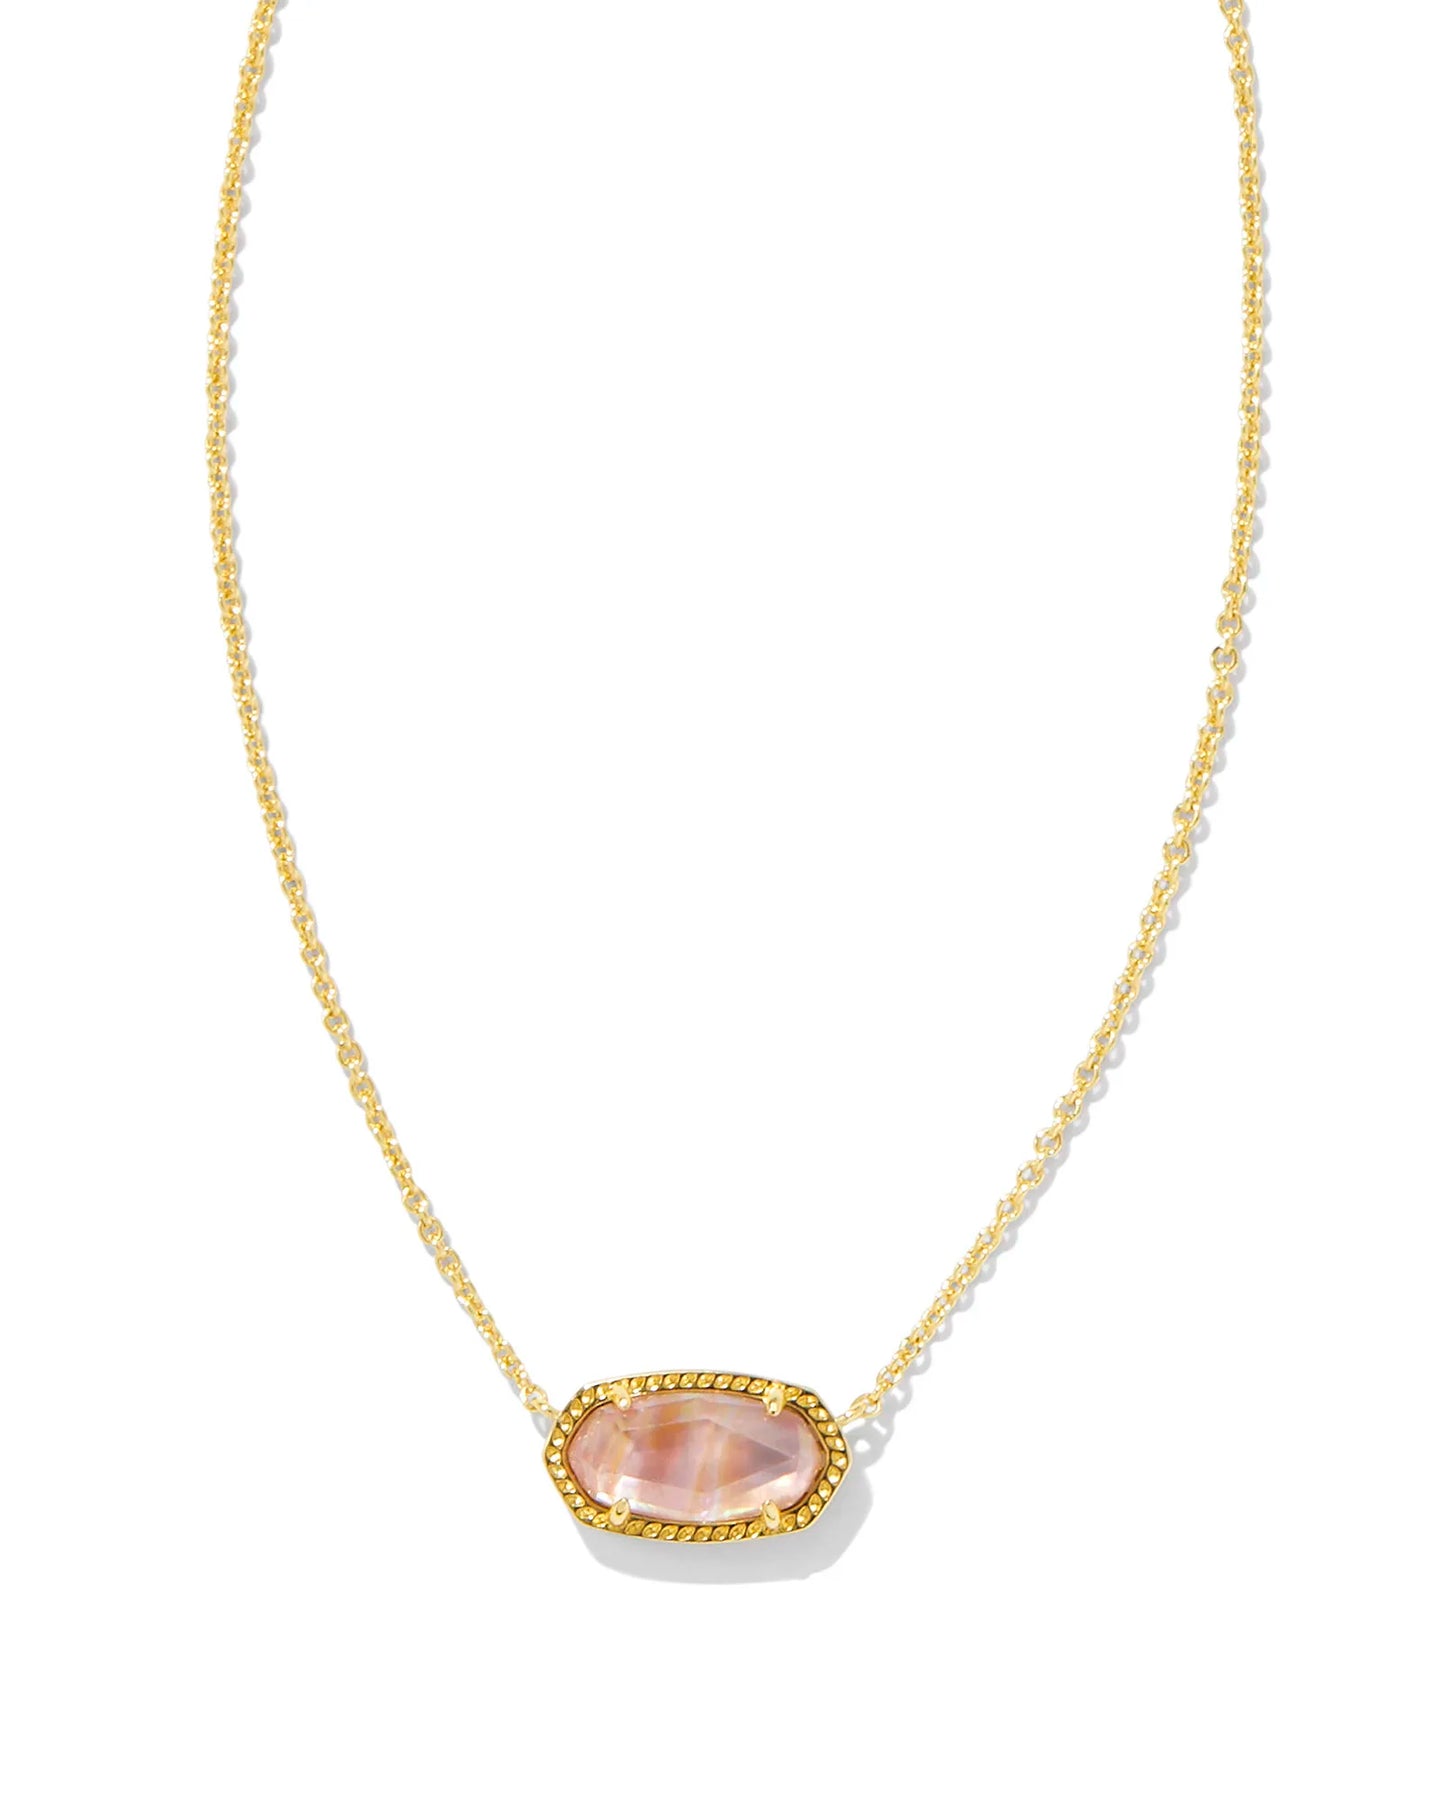 NWT Kendra Scott Elisa Abalone Shell Necklace Gold Plated | eBay